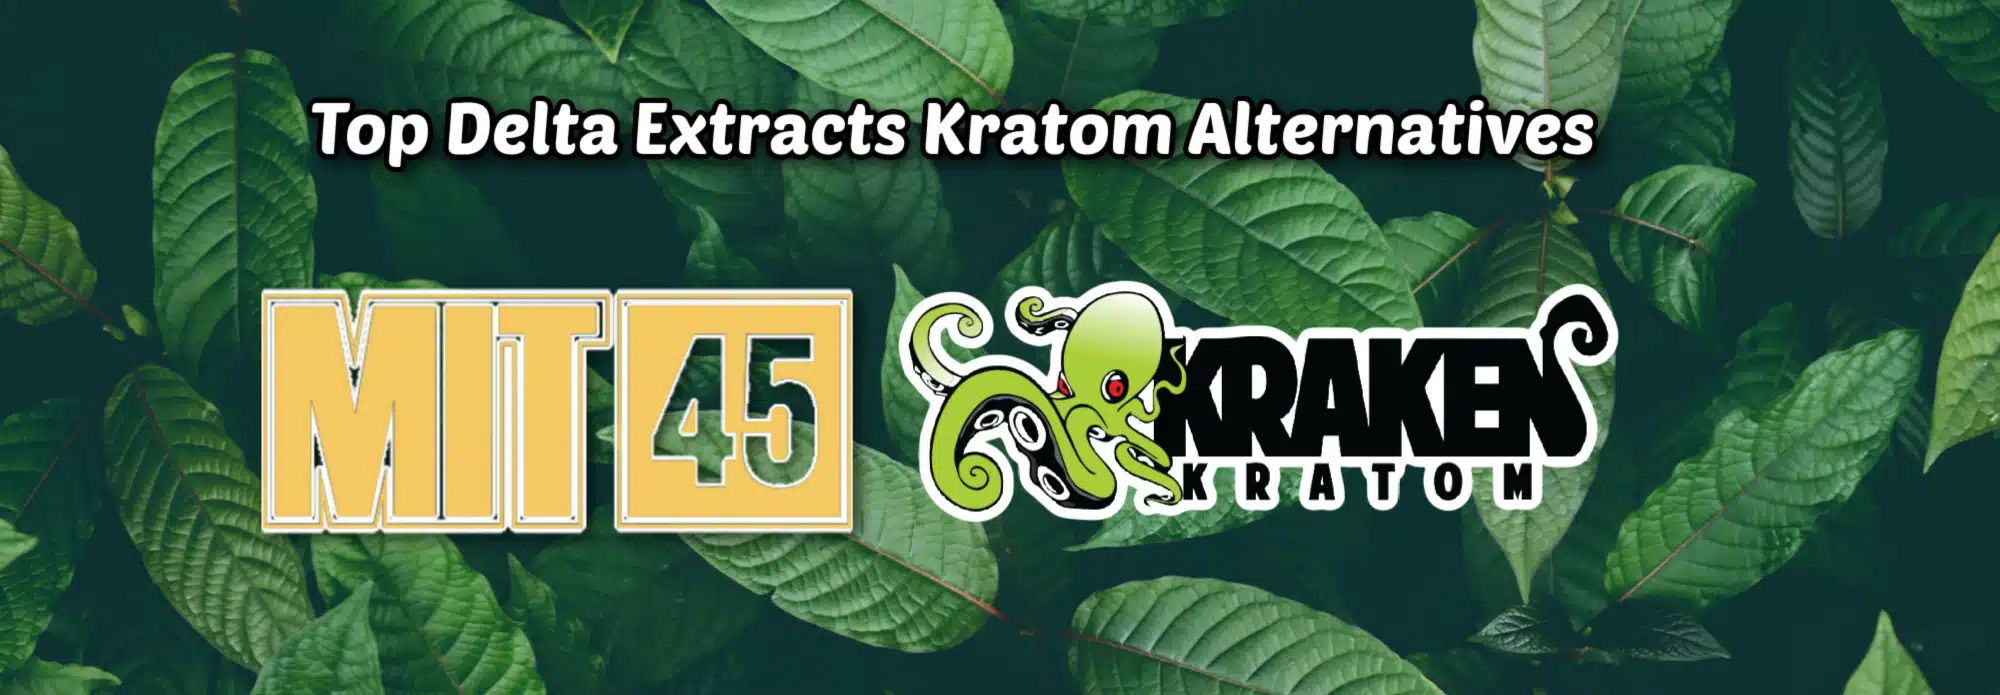 top delta extracts kratom alternatives with company logos